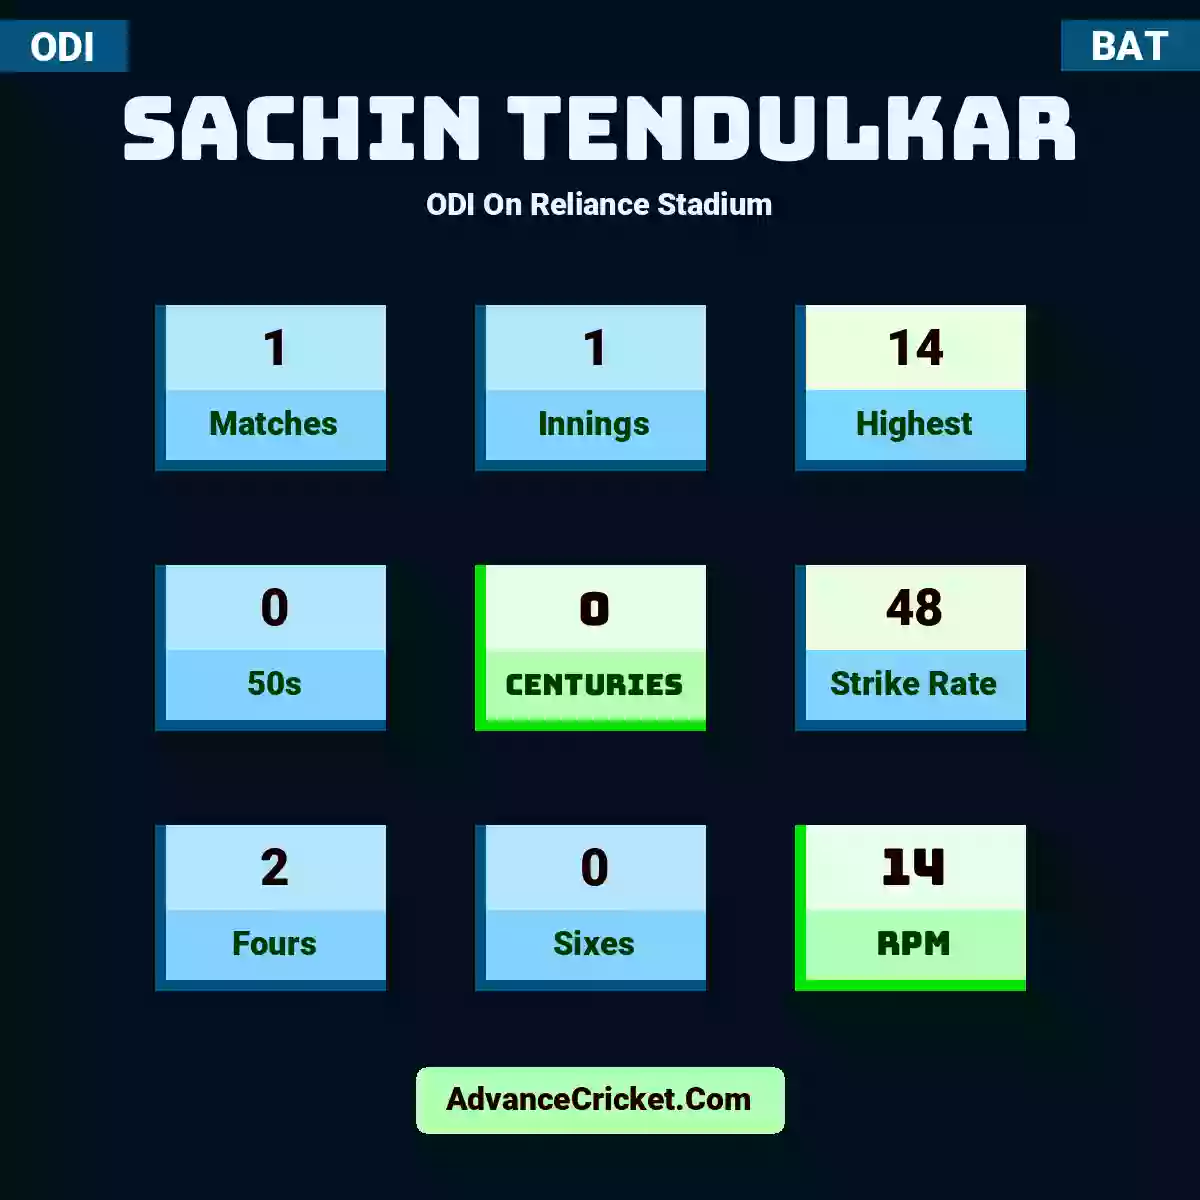 Sachin Tendulkar ODI  On Reliance Stadium, Sachin Tendulkar played 1 matches, scored 14 runs as highest, 0 half-centuries, and 0 centuries, with a strike rate of 48. S.Tendulkar hit 2 fours and 0 sixes, with an RPM of 14.